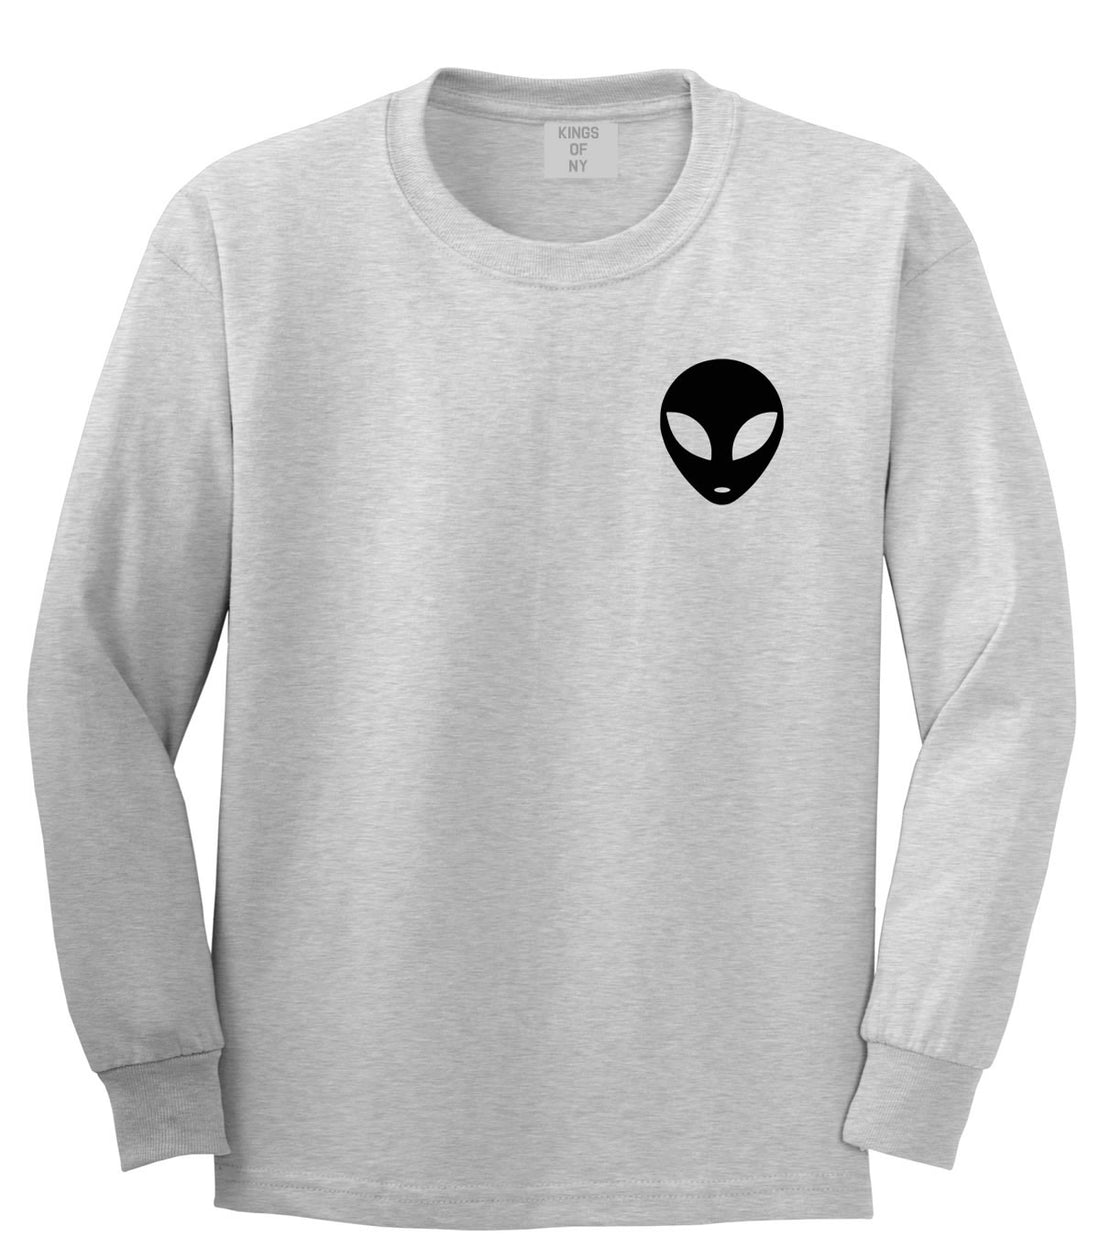 Alien Head Long Sleeve T-Shirt